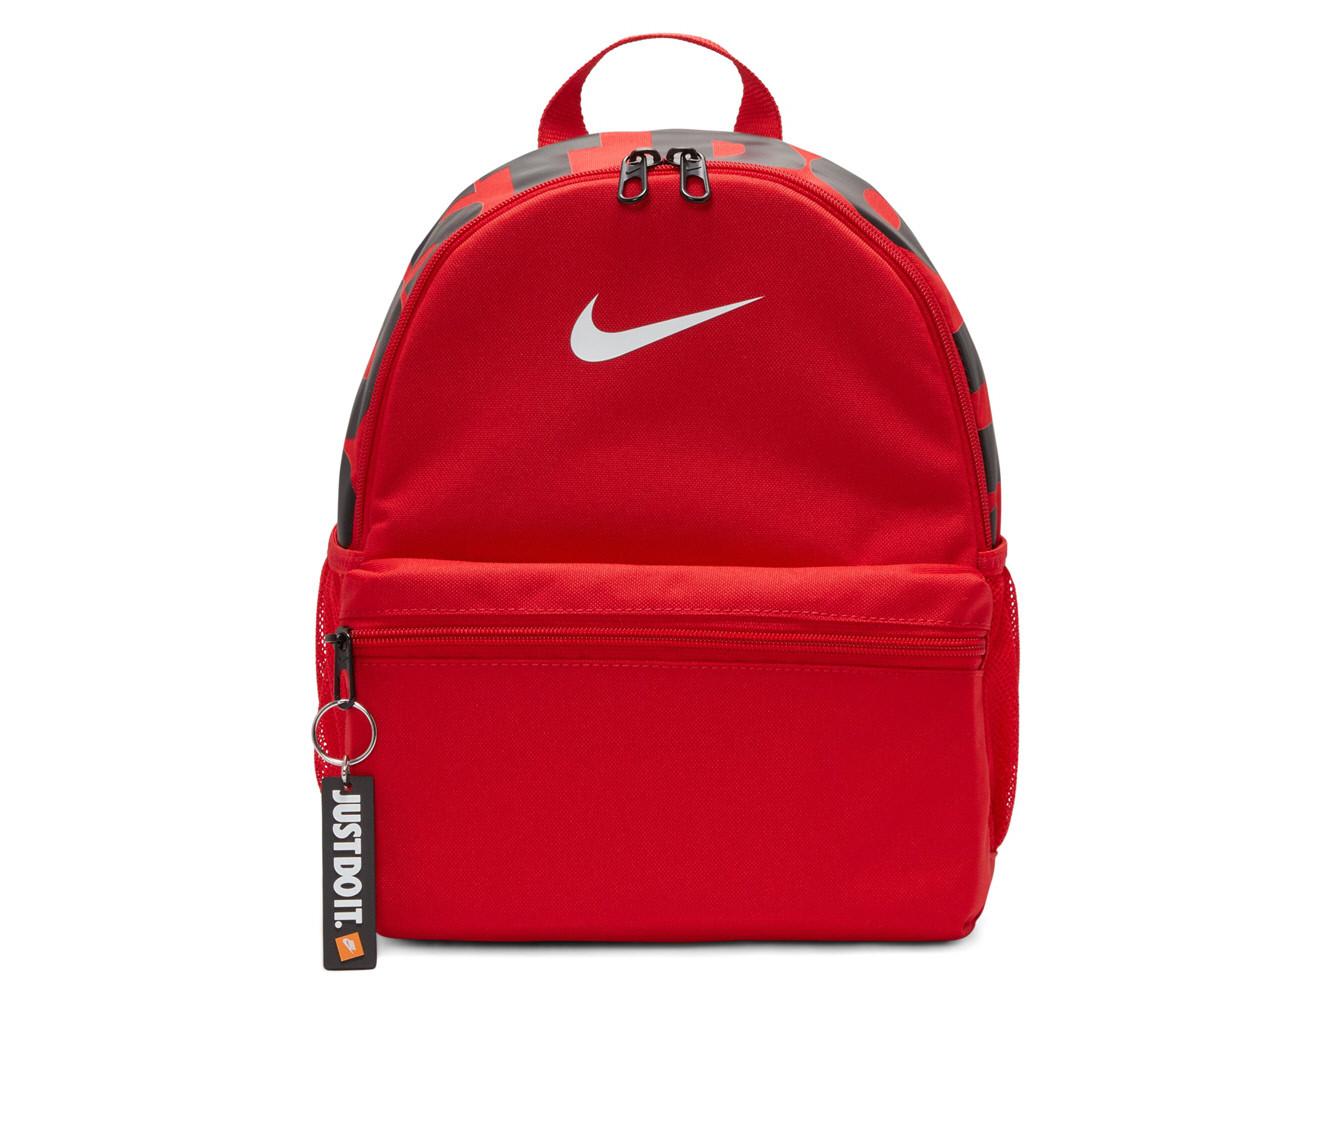 Nike Unisex Purse Crossbody Shoulder Bag *3 COLORS* NWT